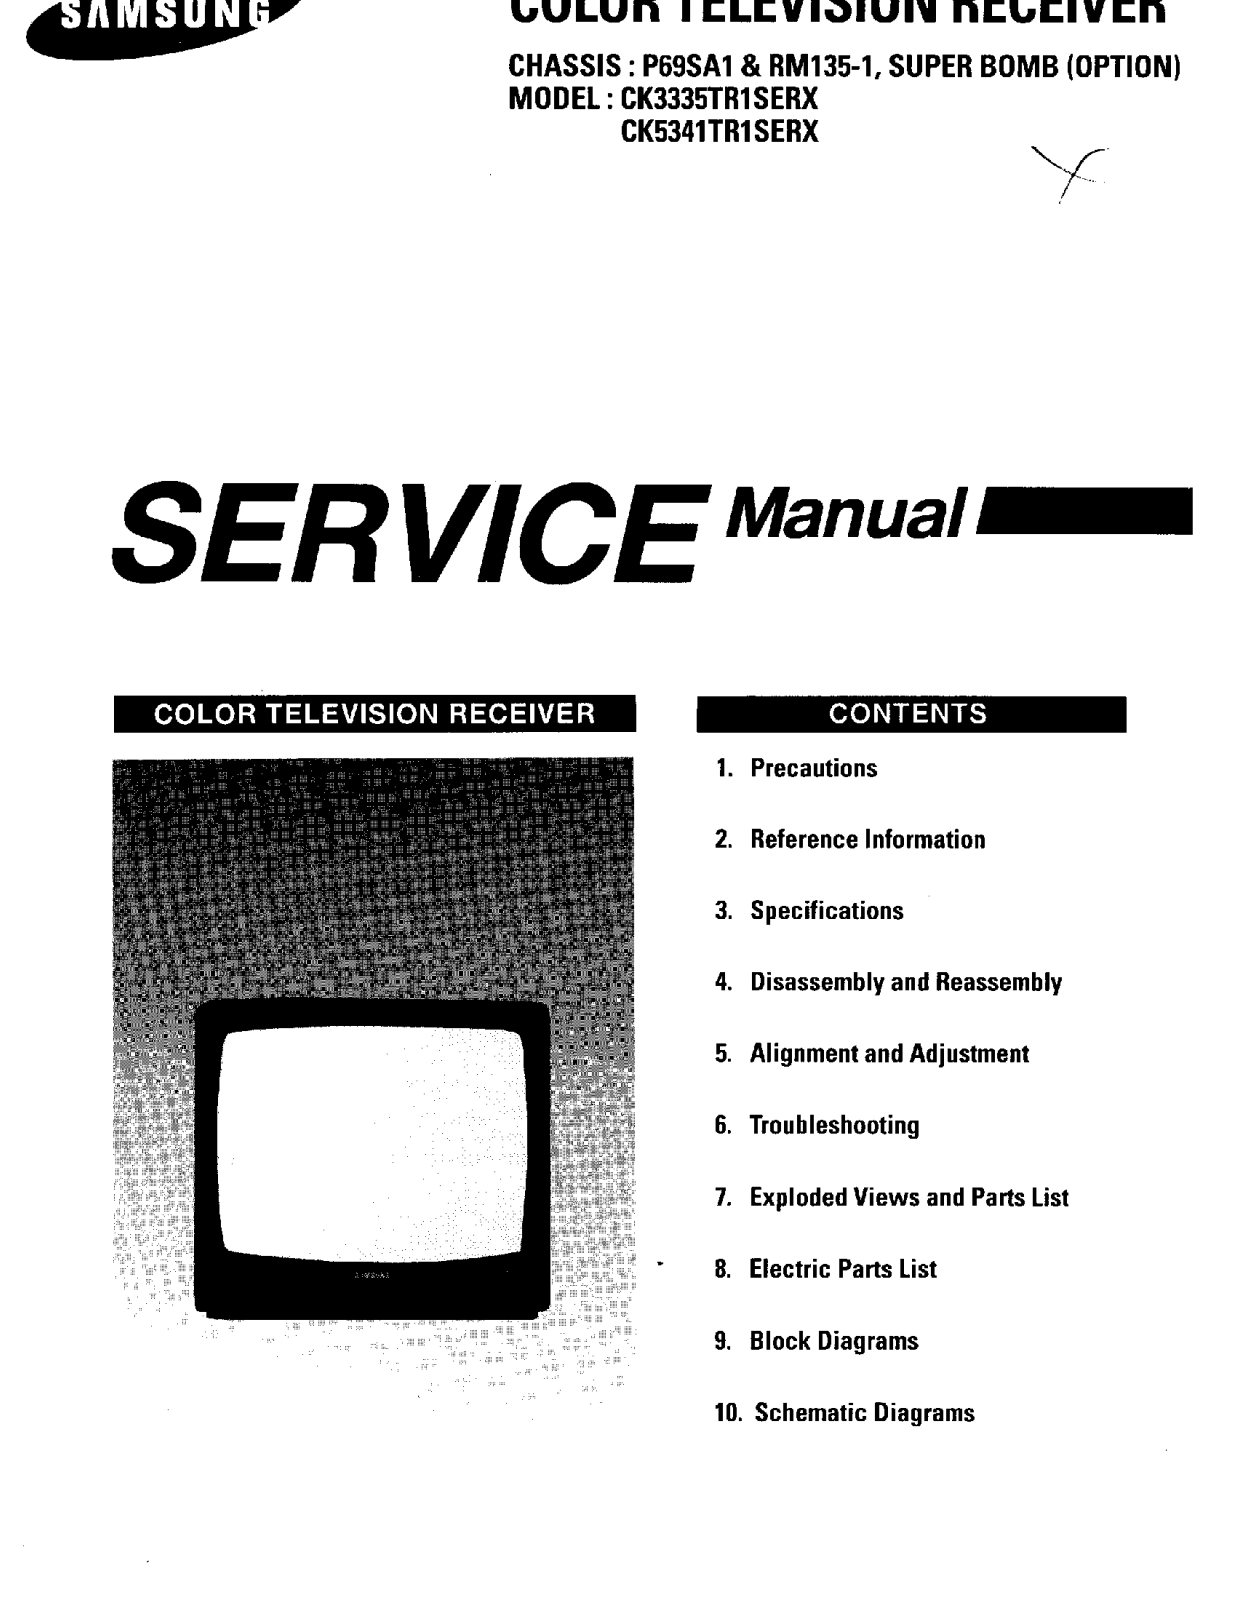 Samsung CK3335TR1SERX, CK5341TR1SERX Service manual